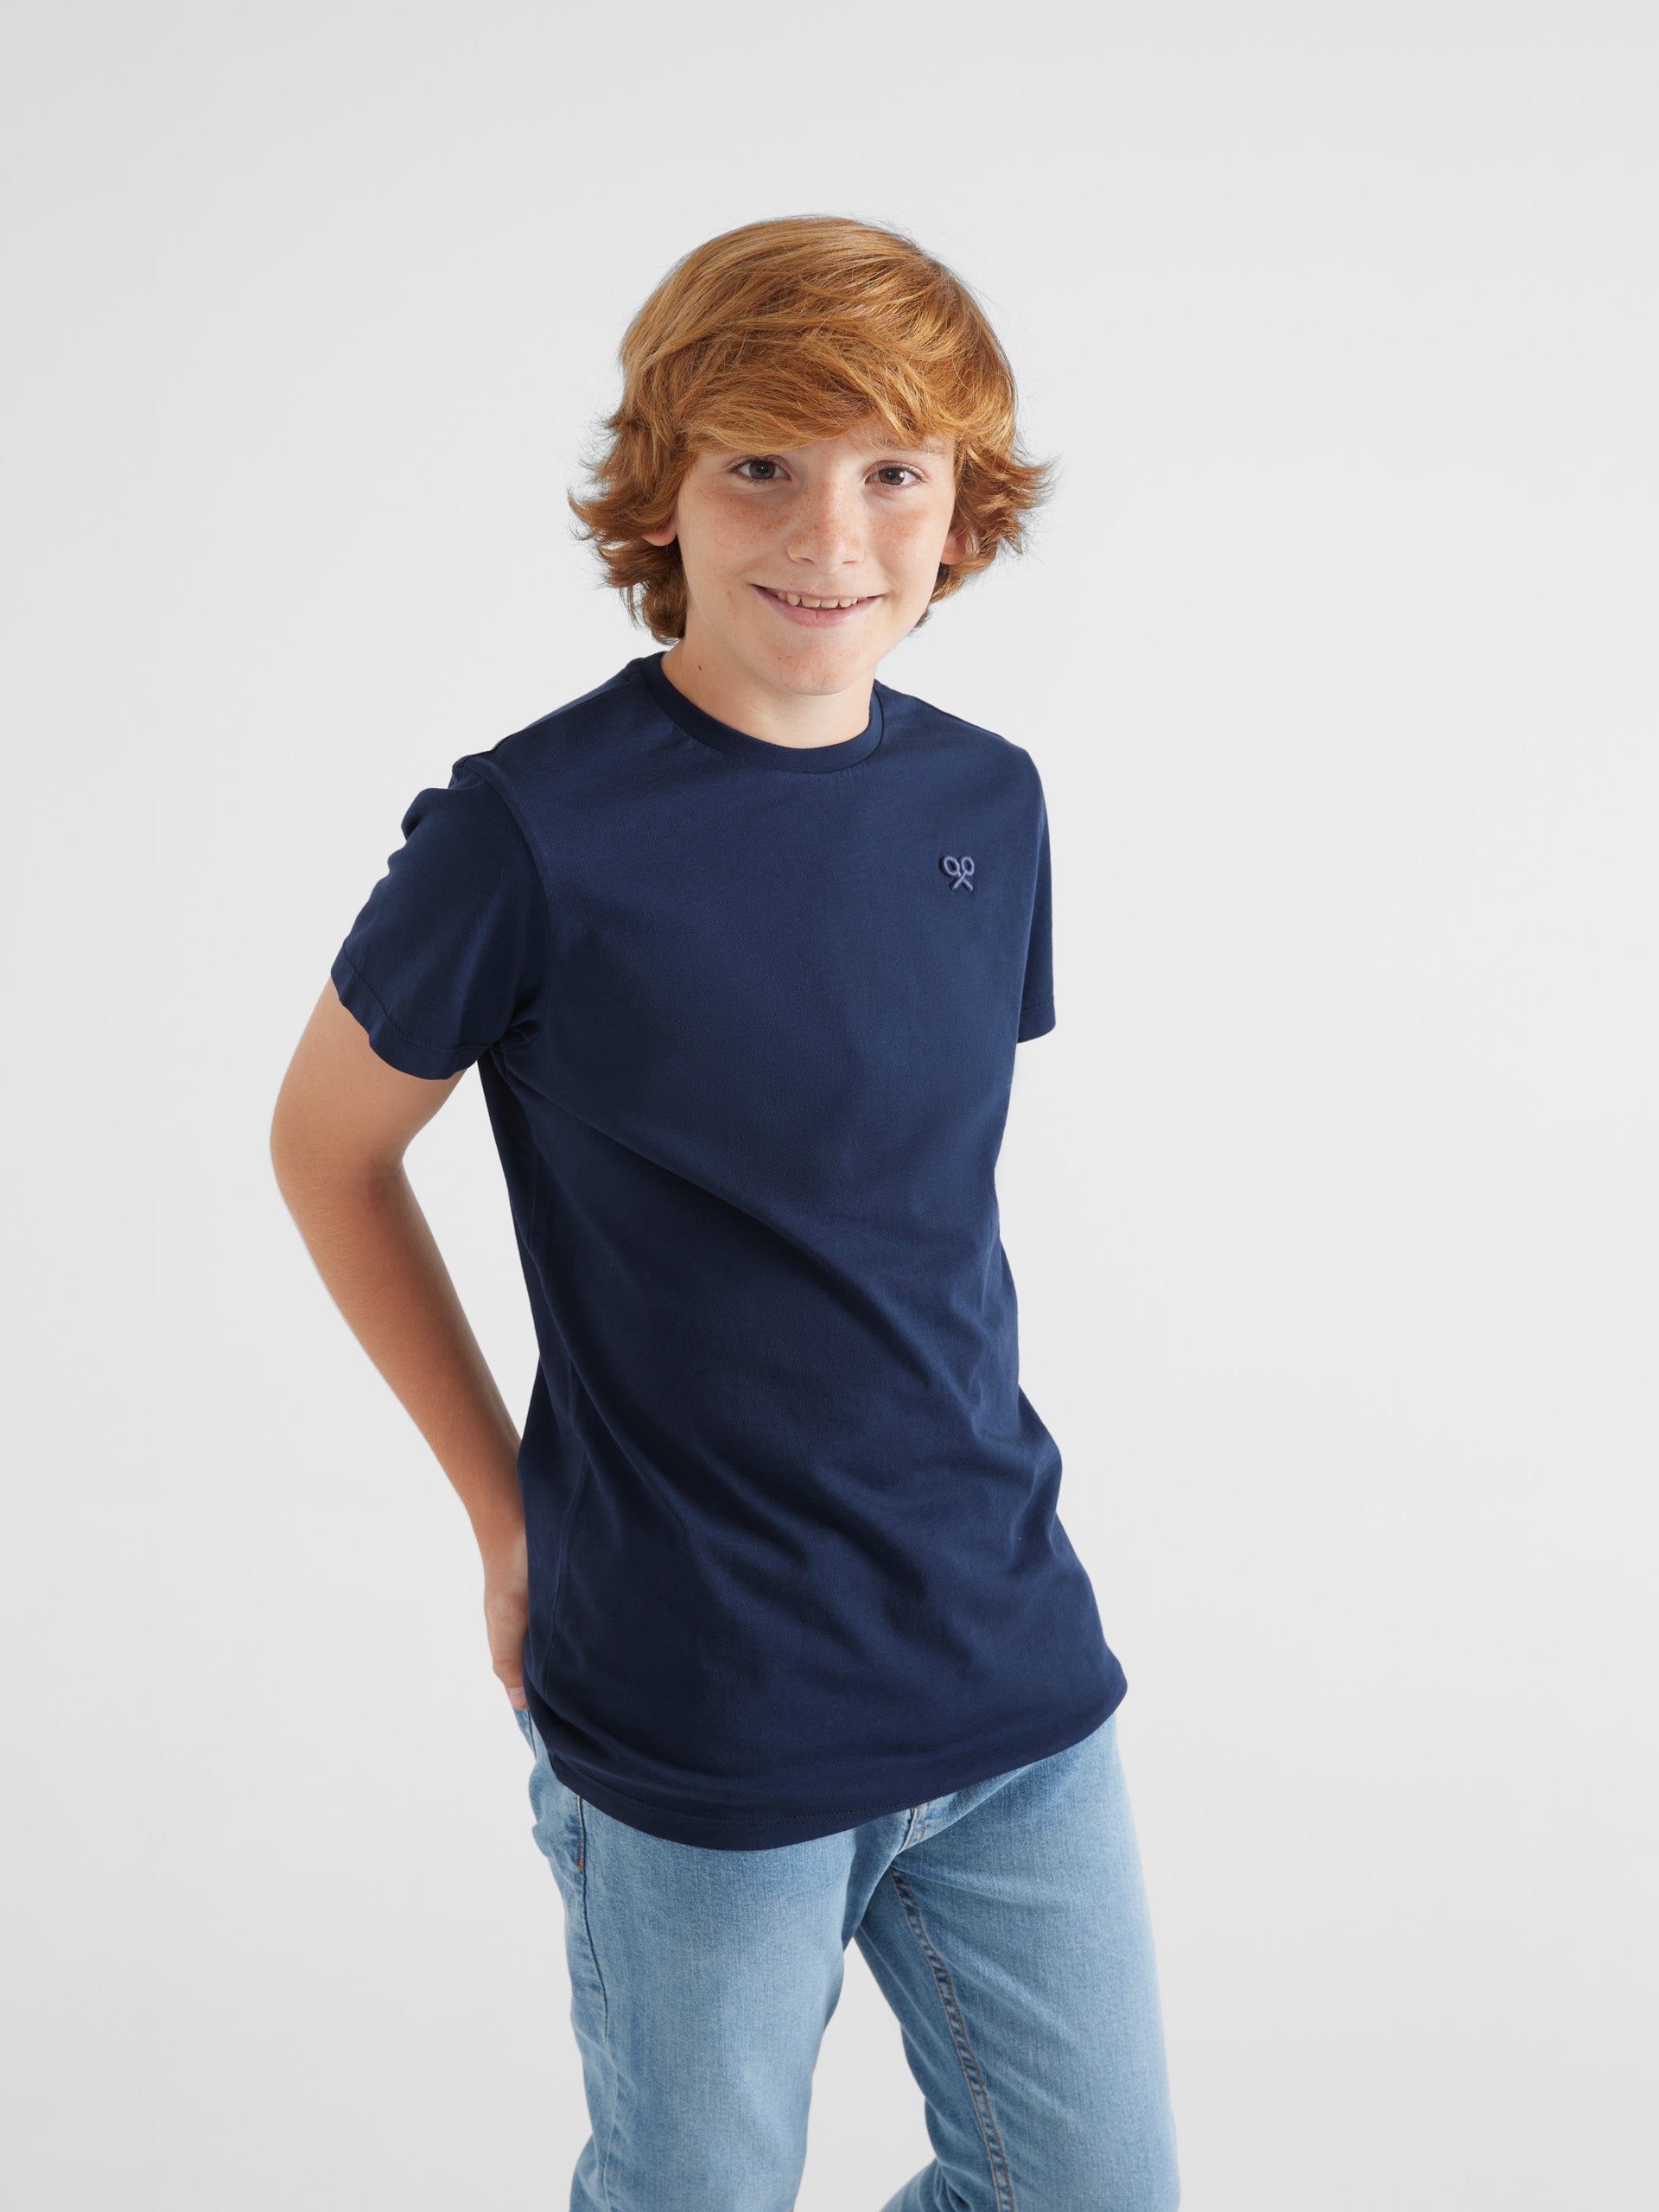 Camiseta kids positive feelings azul marino